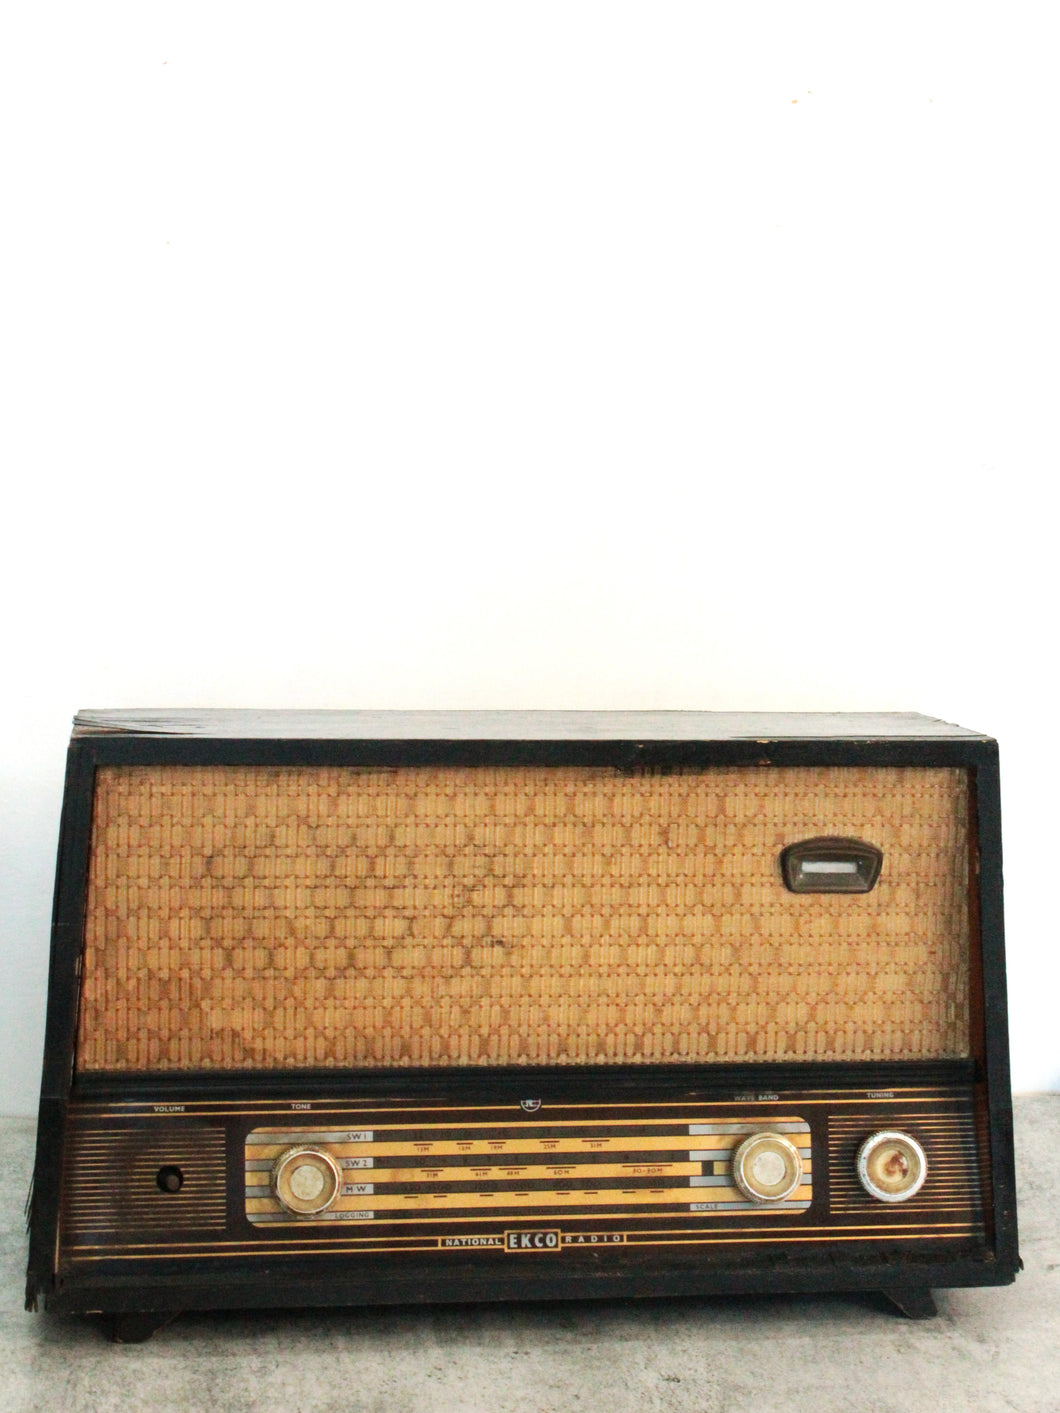 Vintage Transistor Radio - A Classic Charm